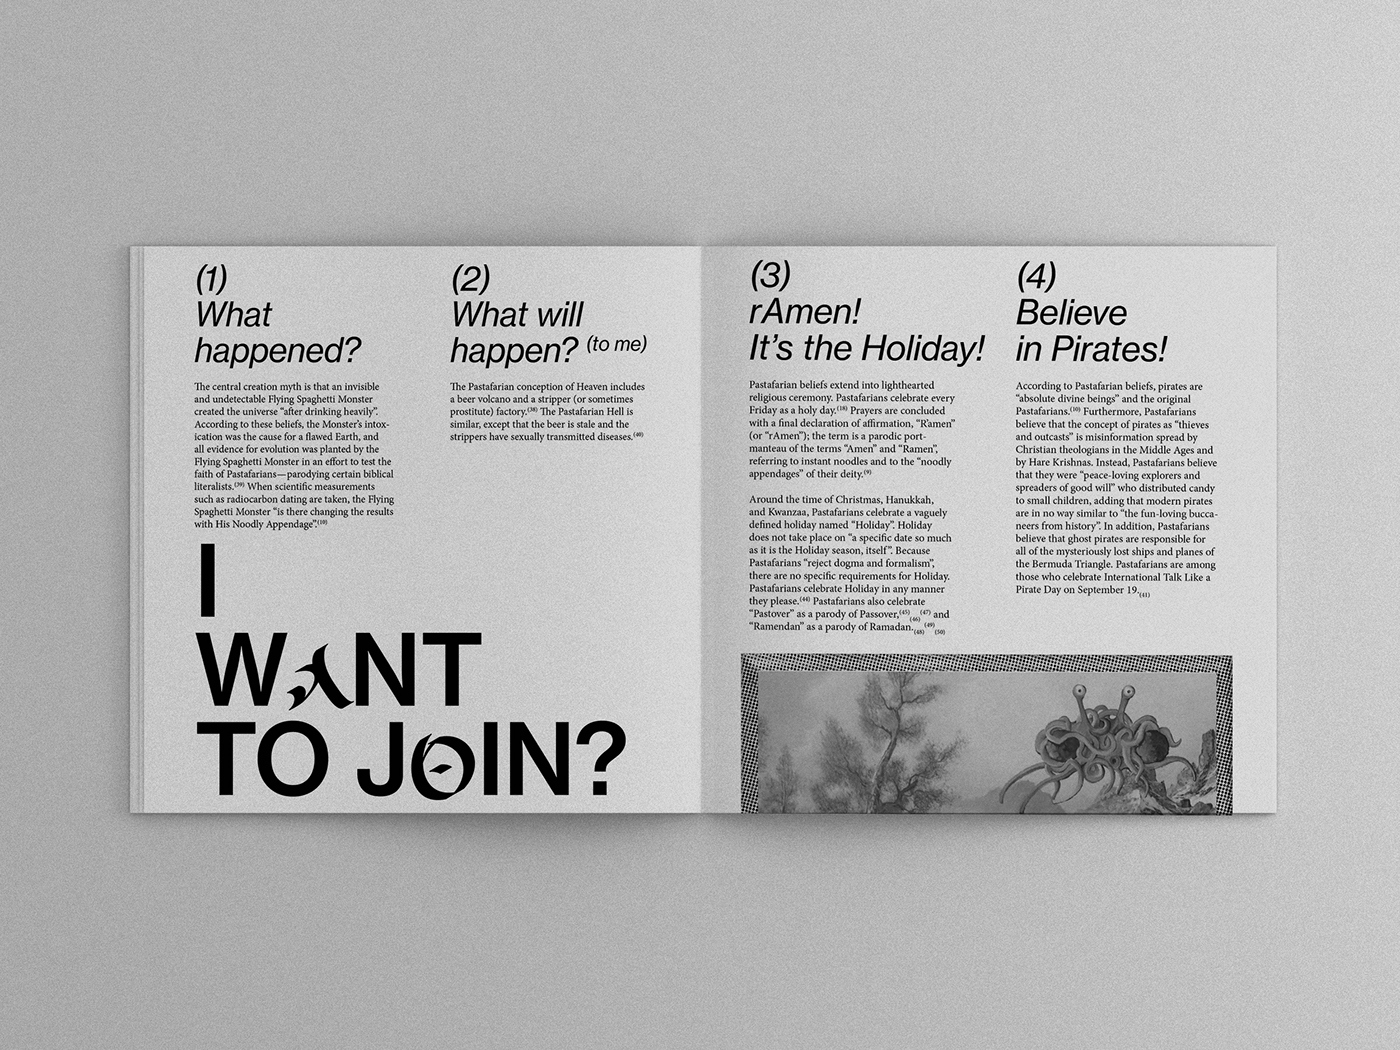 john caserta type 3 typography   Wikipedia Entry book fsm Creationism book design Booklet